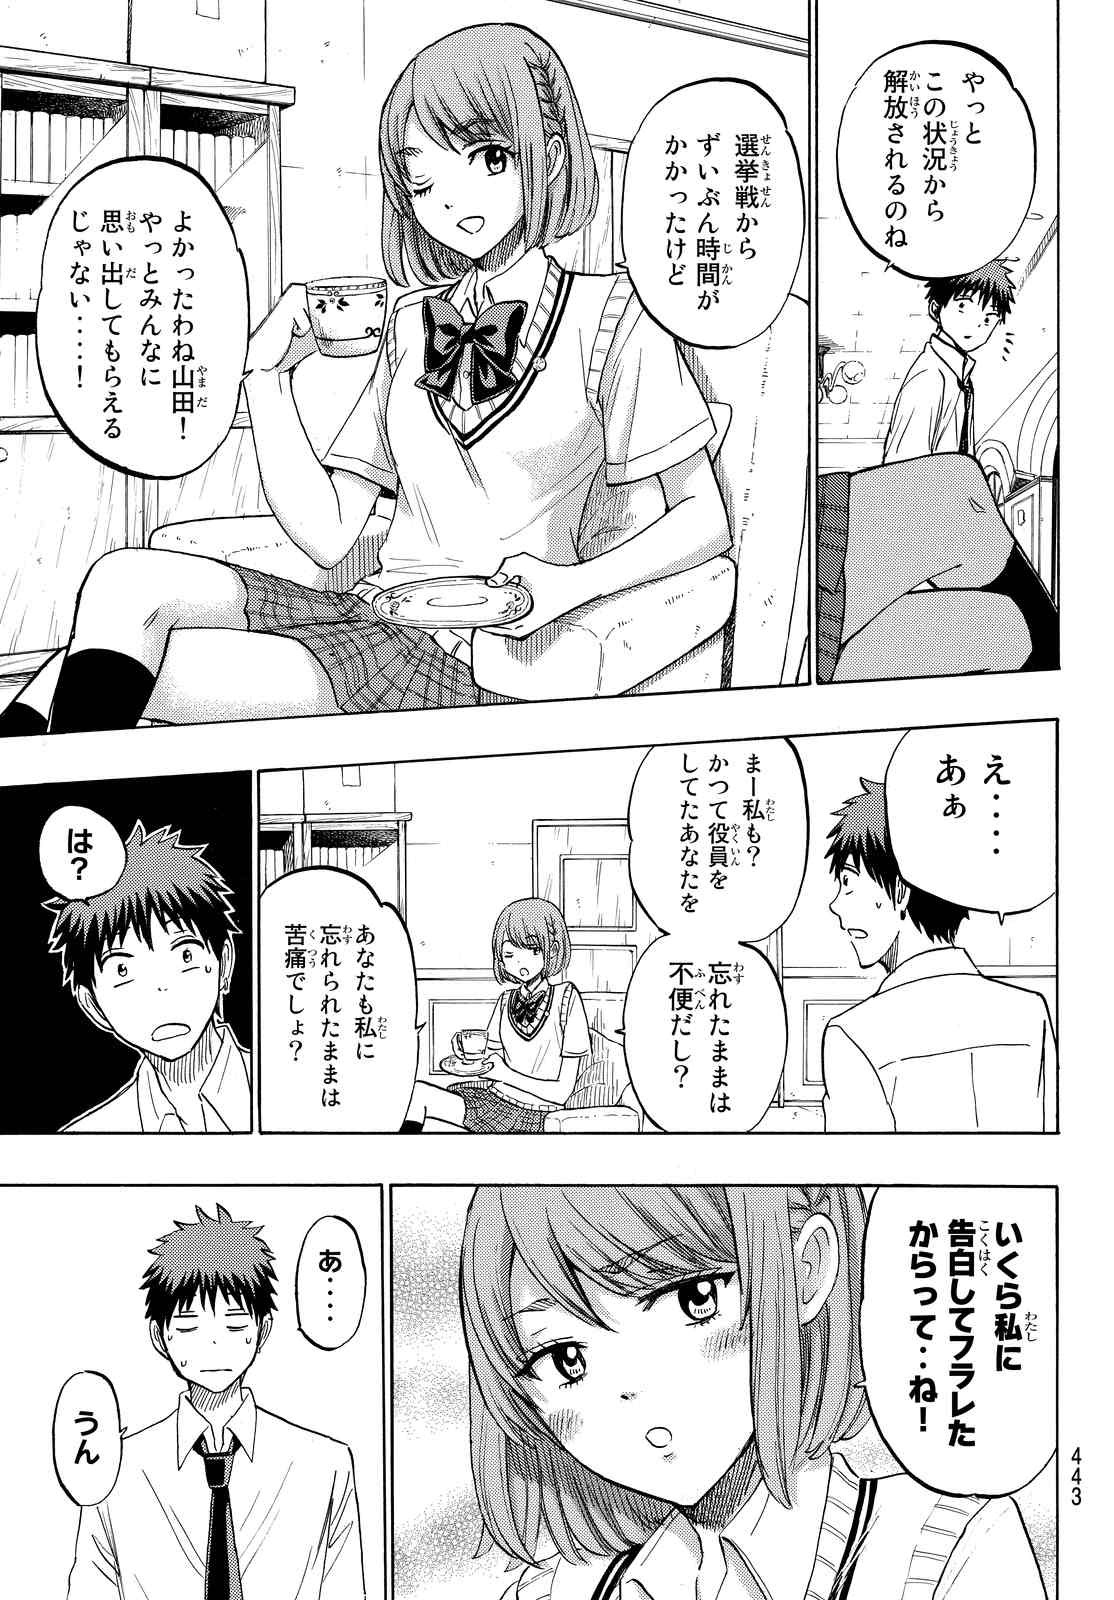 Yamada-kun to 7-nin no Majo - Chapter 223 - Page 3